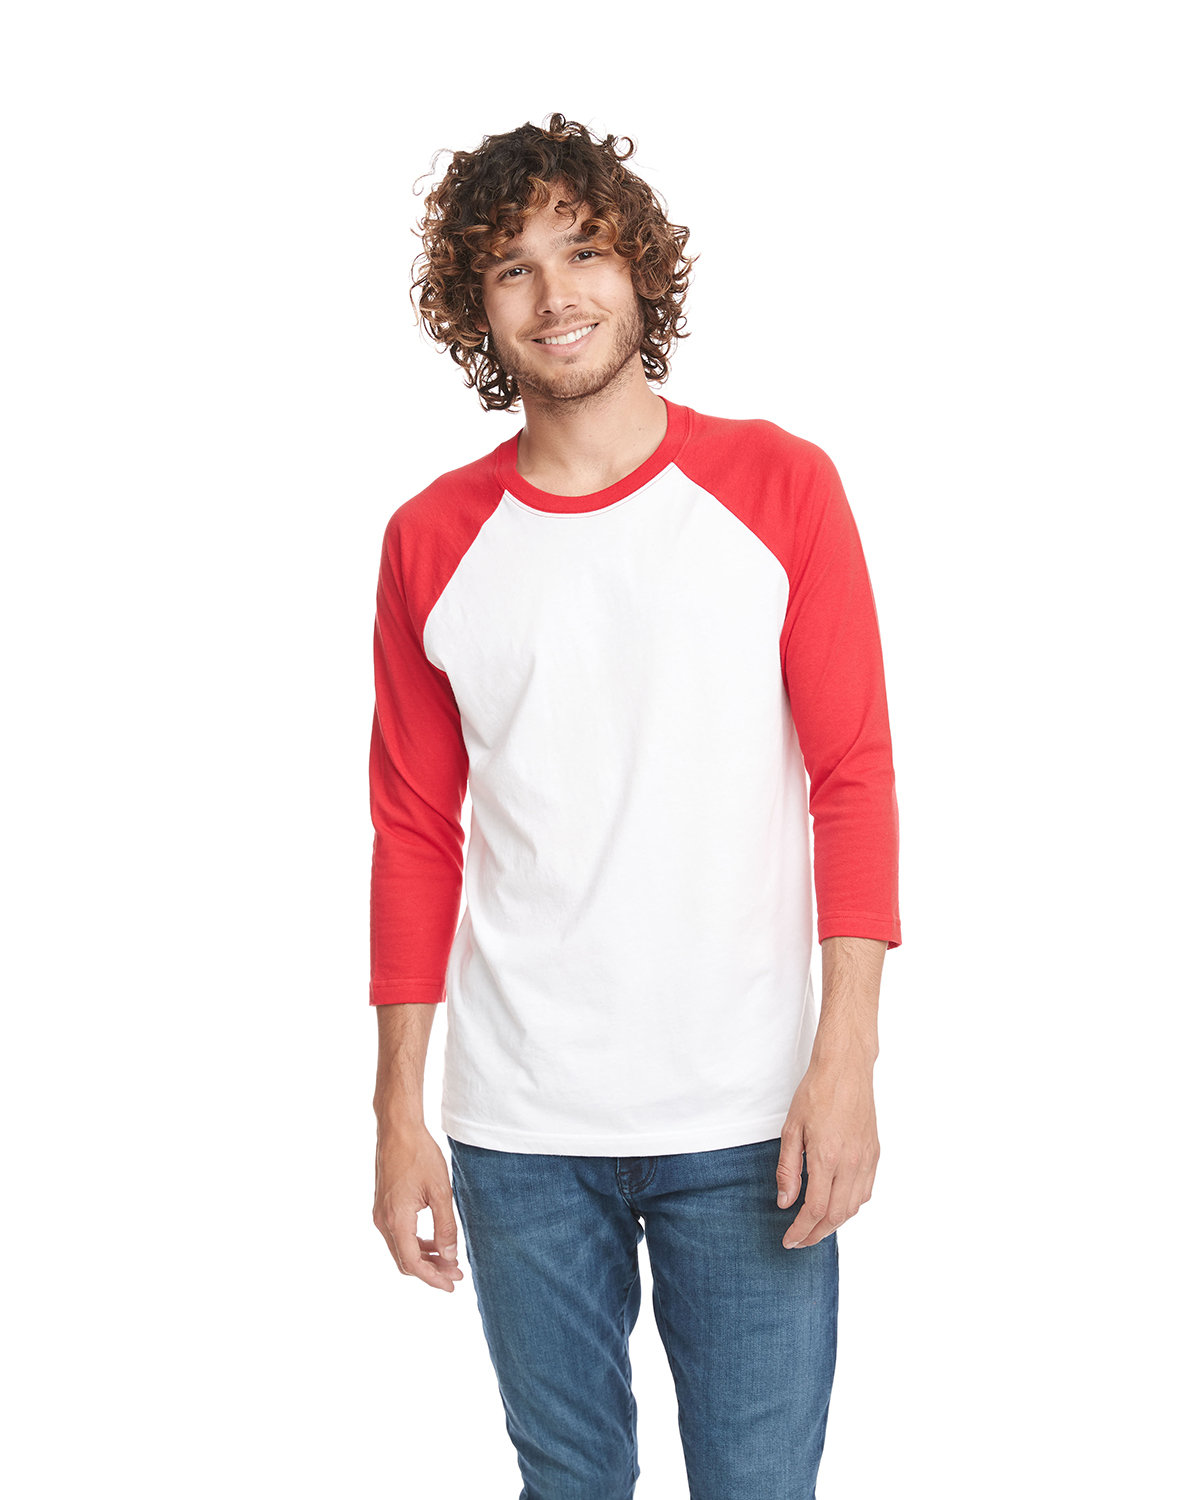 Next Level Apparel Unisex CVC 3/4 Sleeve Raglan Baseball T-Shirt RED/ WHITE 